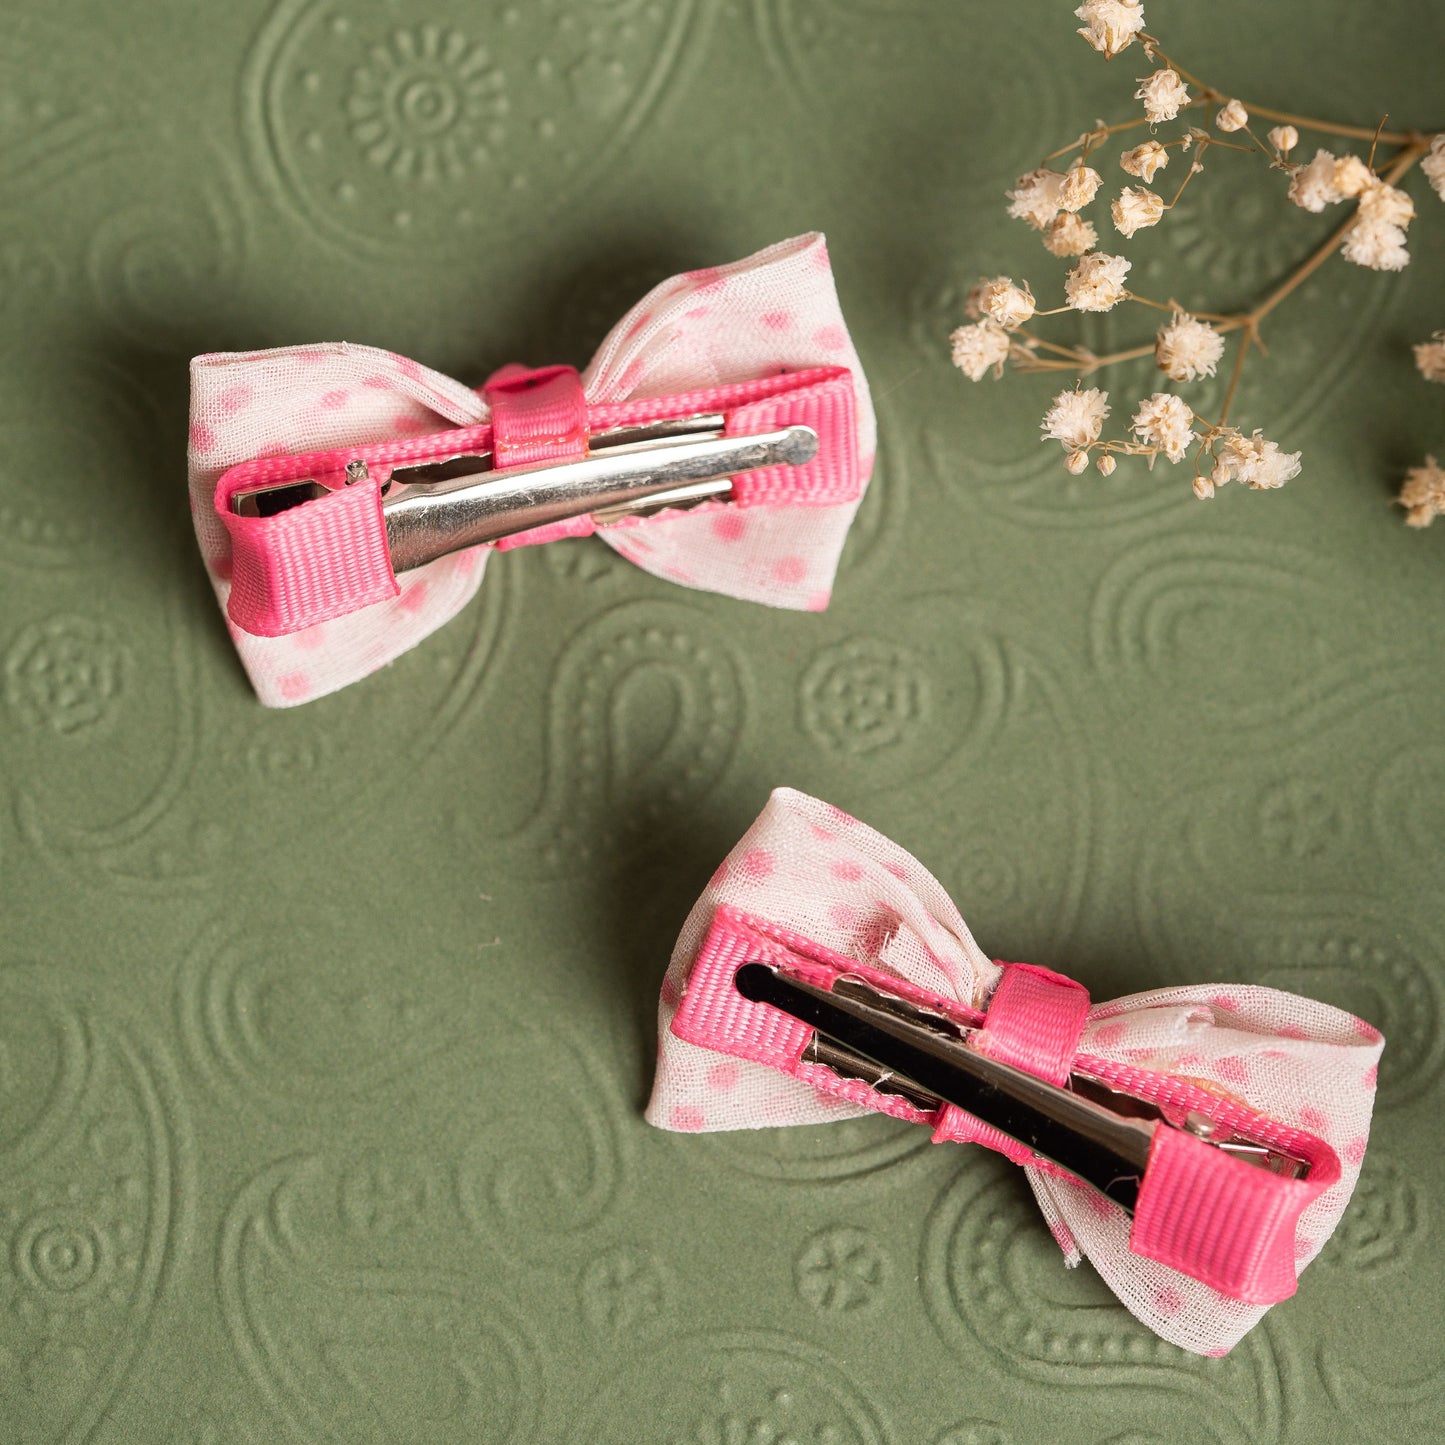 Ribbon Candy - Polka dot print Bow on Alligator Pin- White and Pink